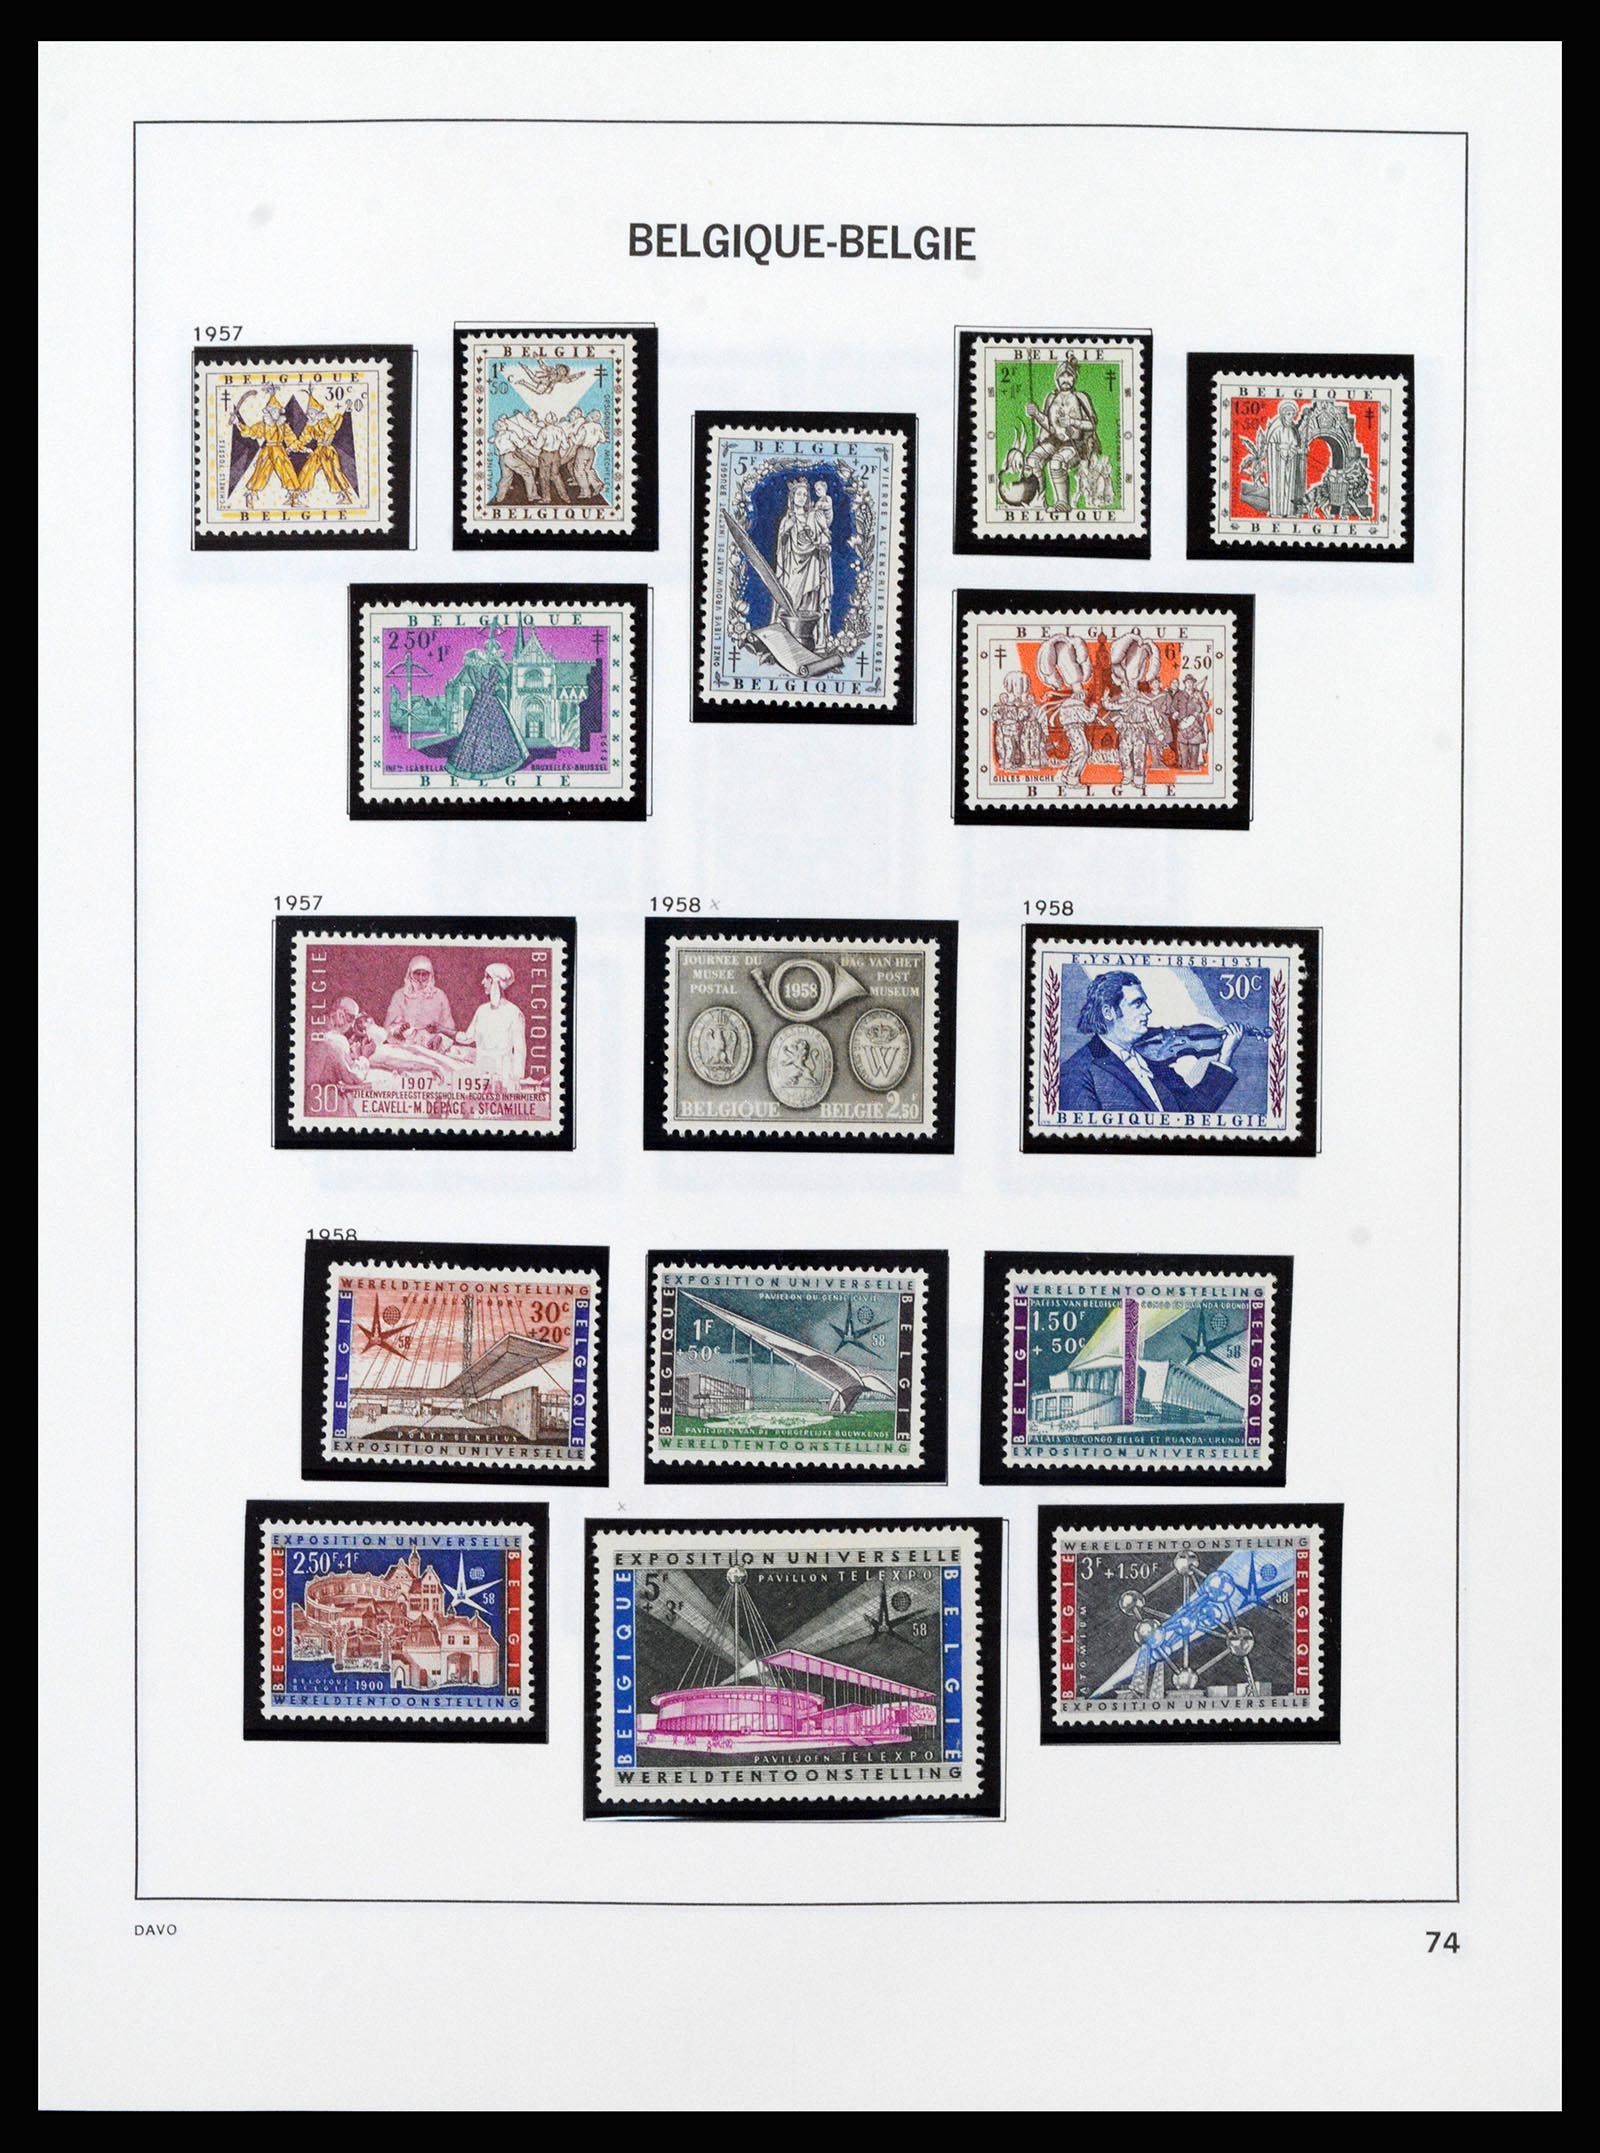 37189 076 - Stamp collection 37189 Belgium 1849-2006.